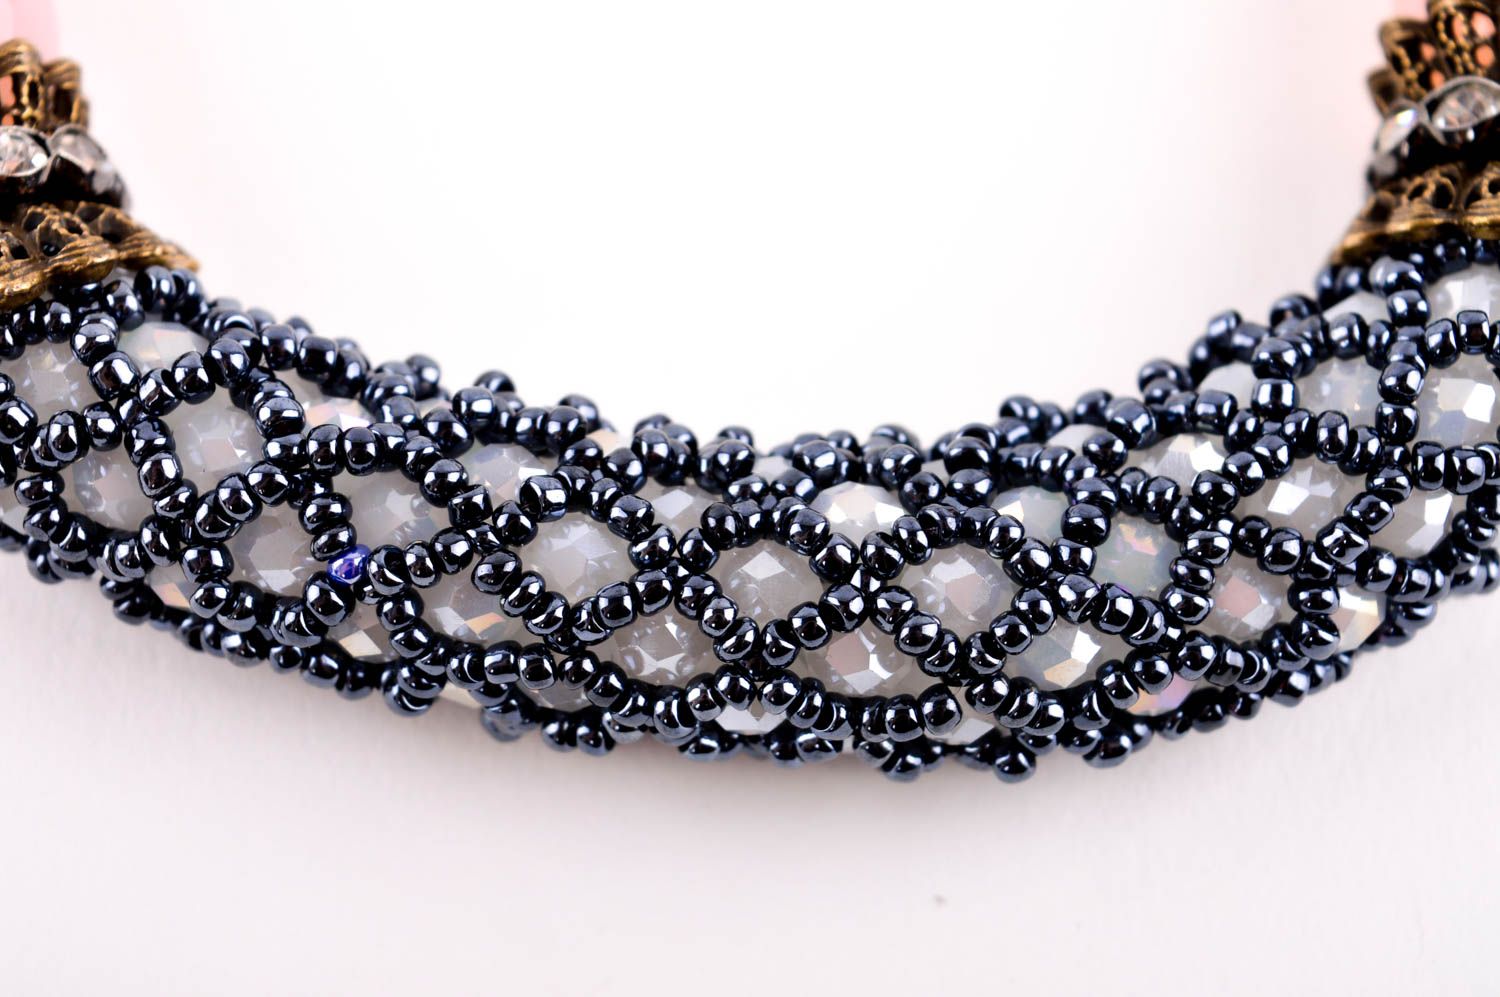 Handmade necklace designer ncklace with stone designer jewelry unusual accessory photo 3